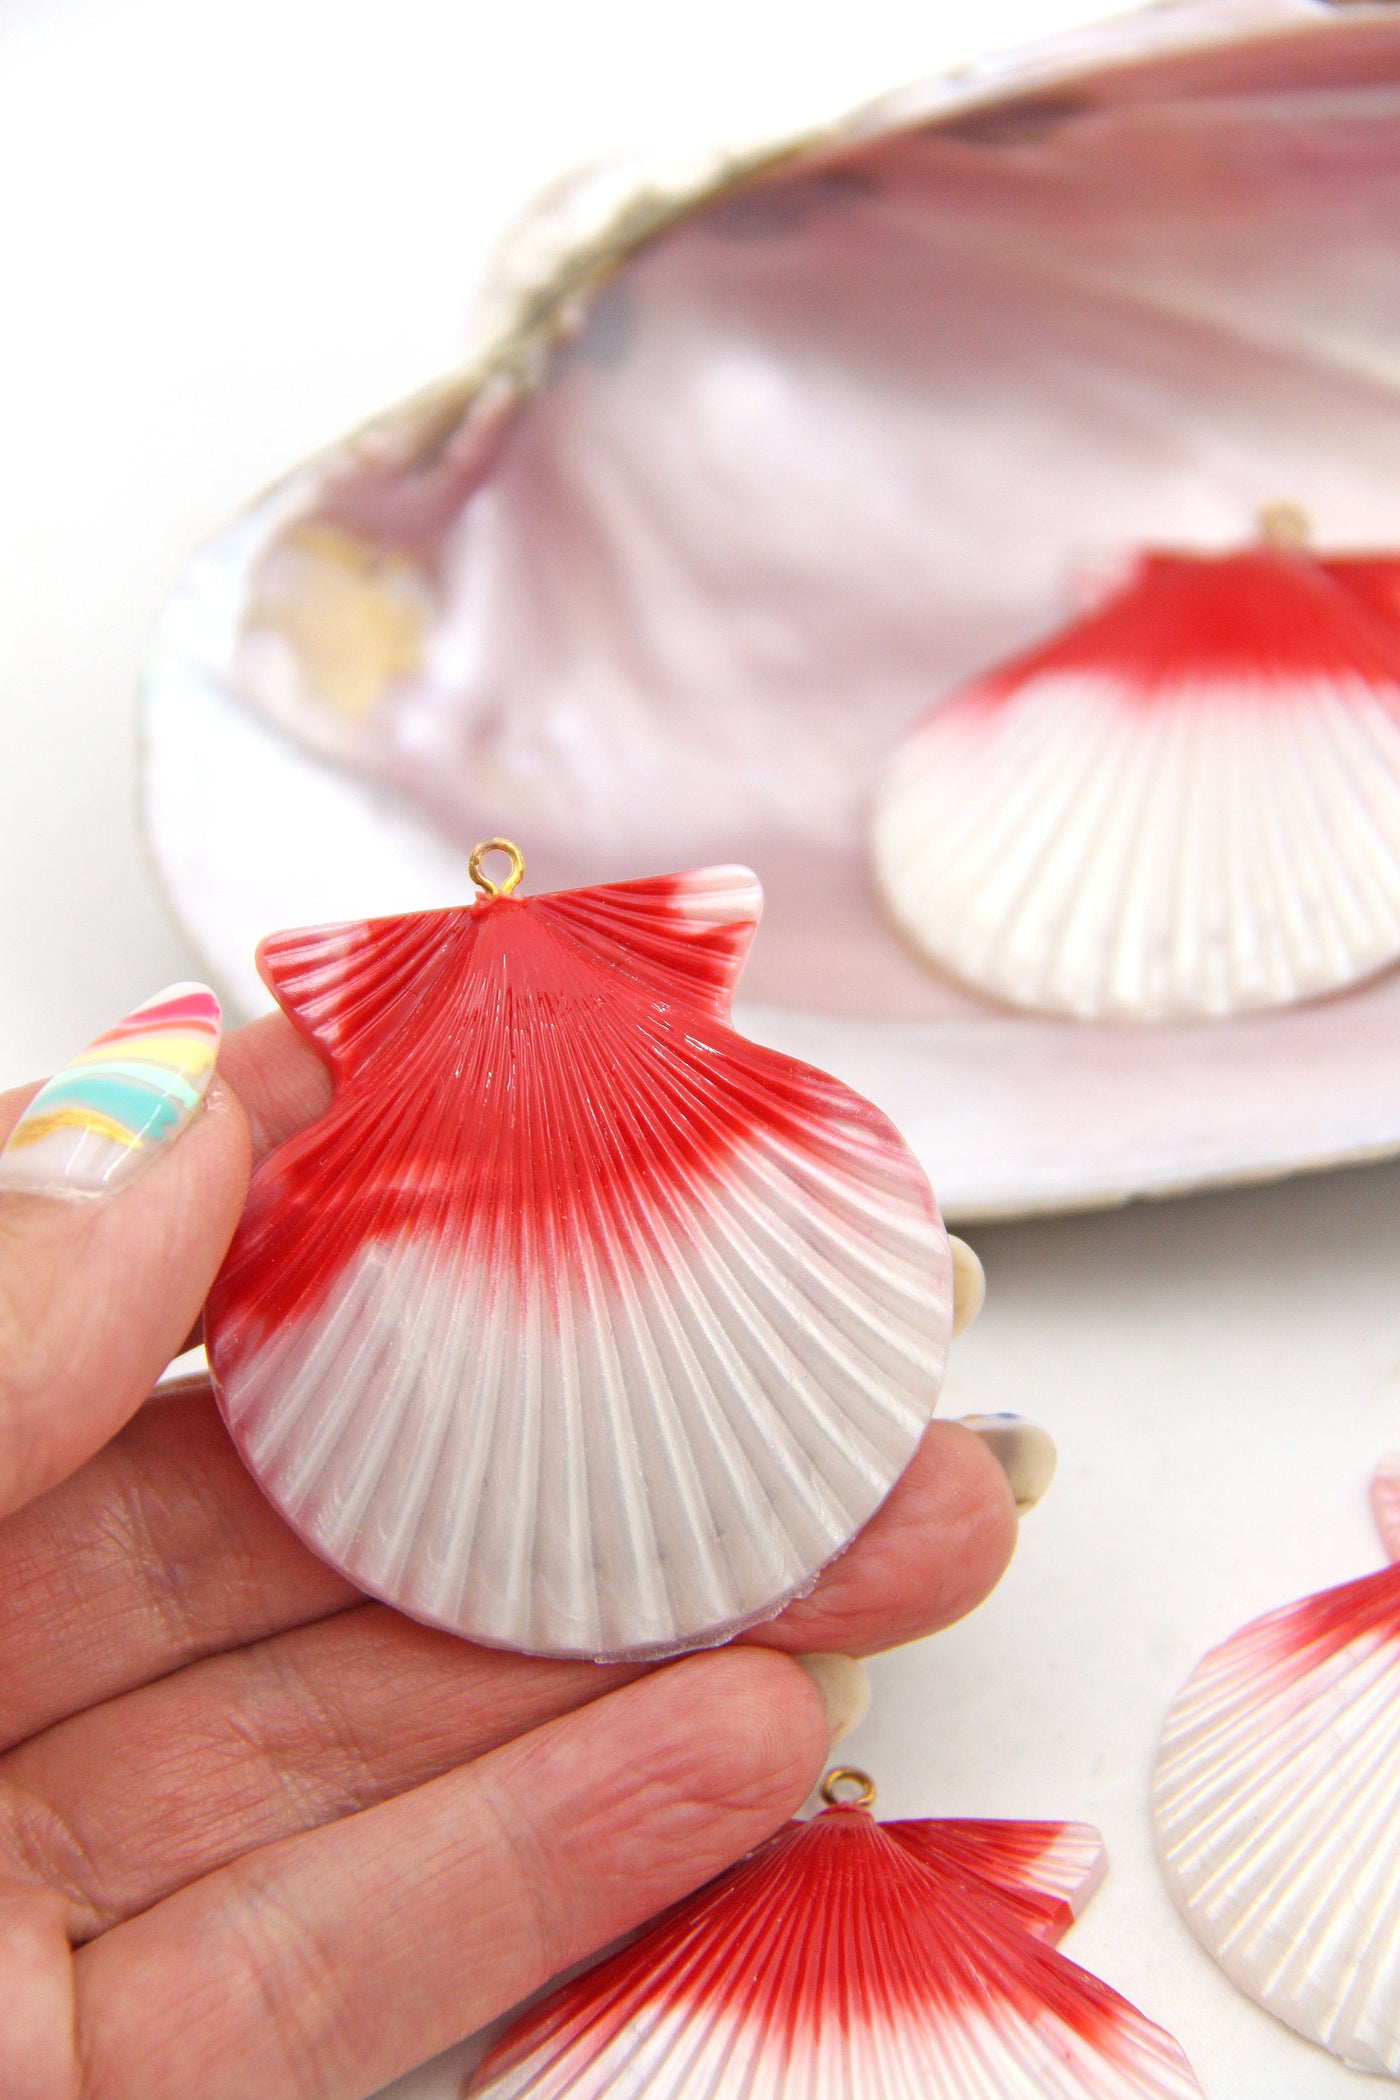 Clam Shell, Red & White Vintage German Resin Pendant, Mermaidcore Charm, 1 pc.